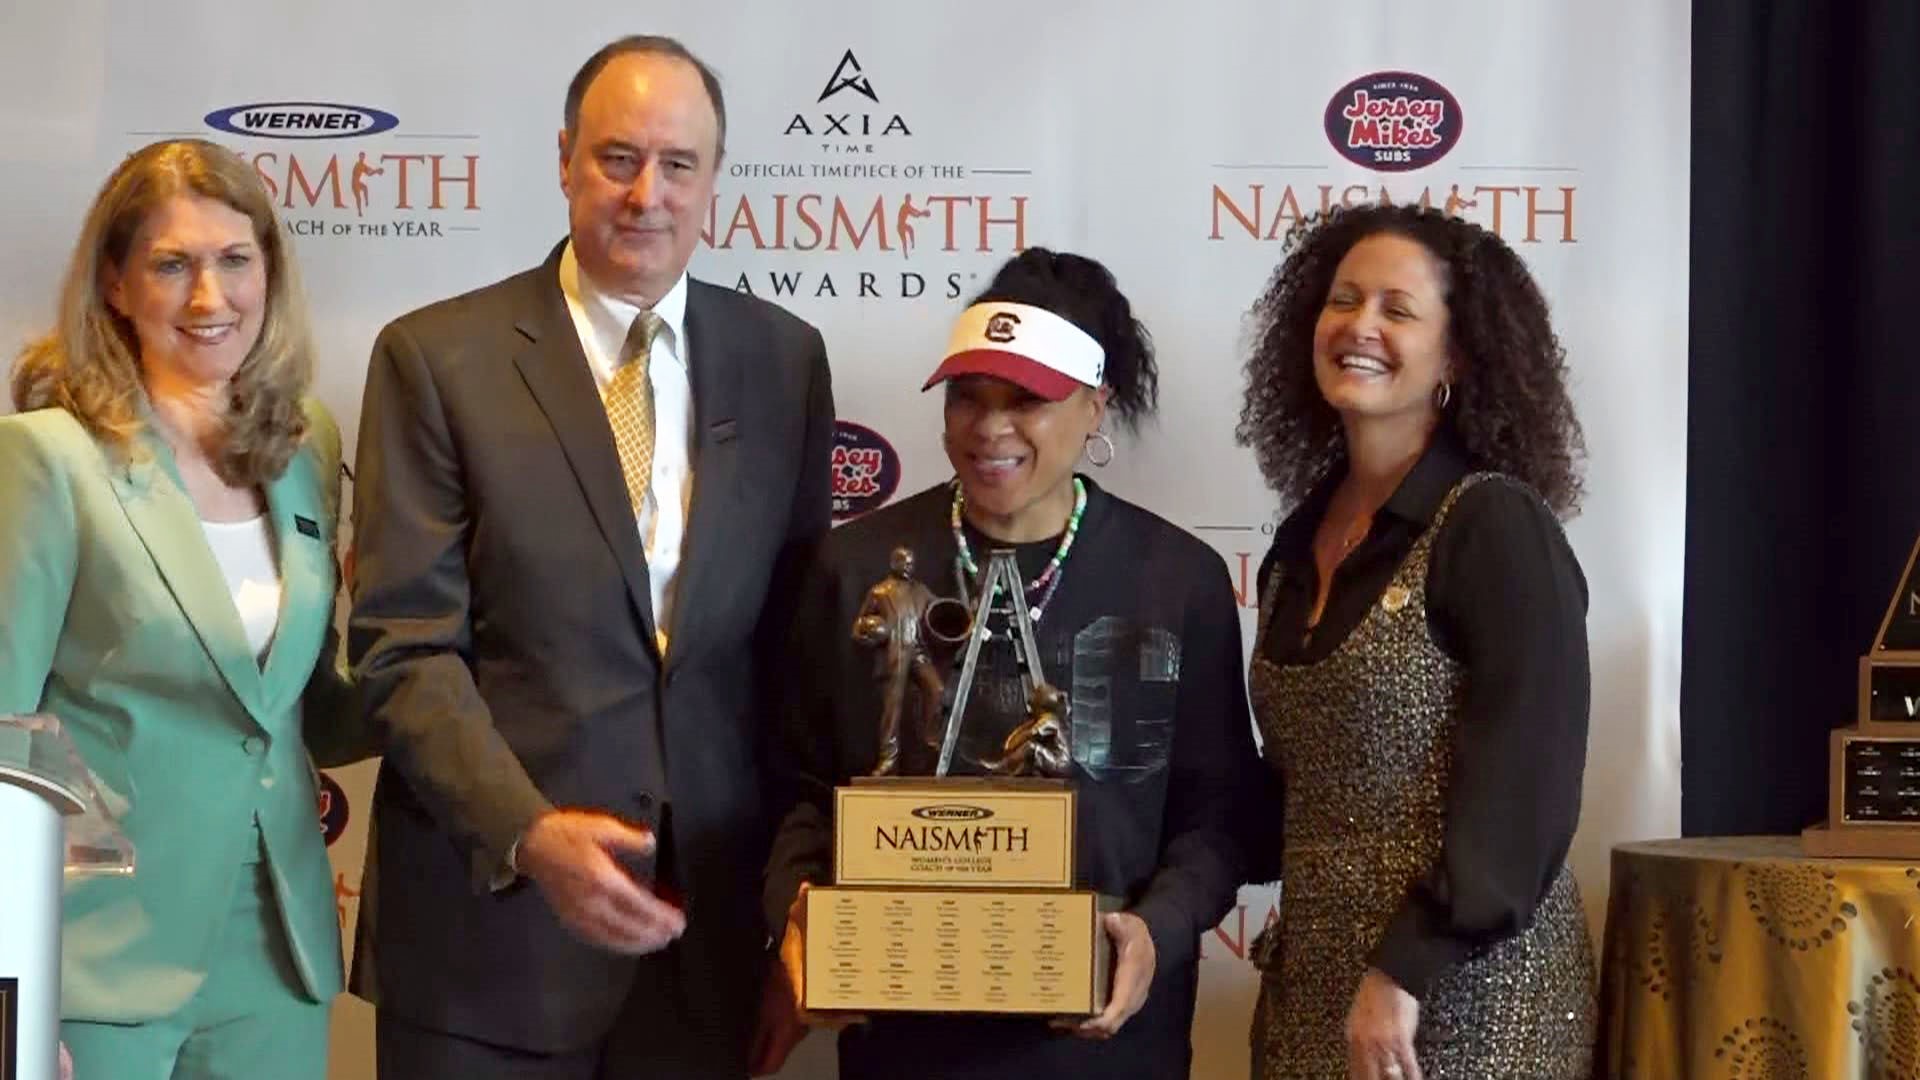 South Carolina Head Coach Dawn Staley has won the Naismith Coach of the Year Award for the third straight year.